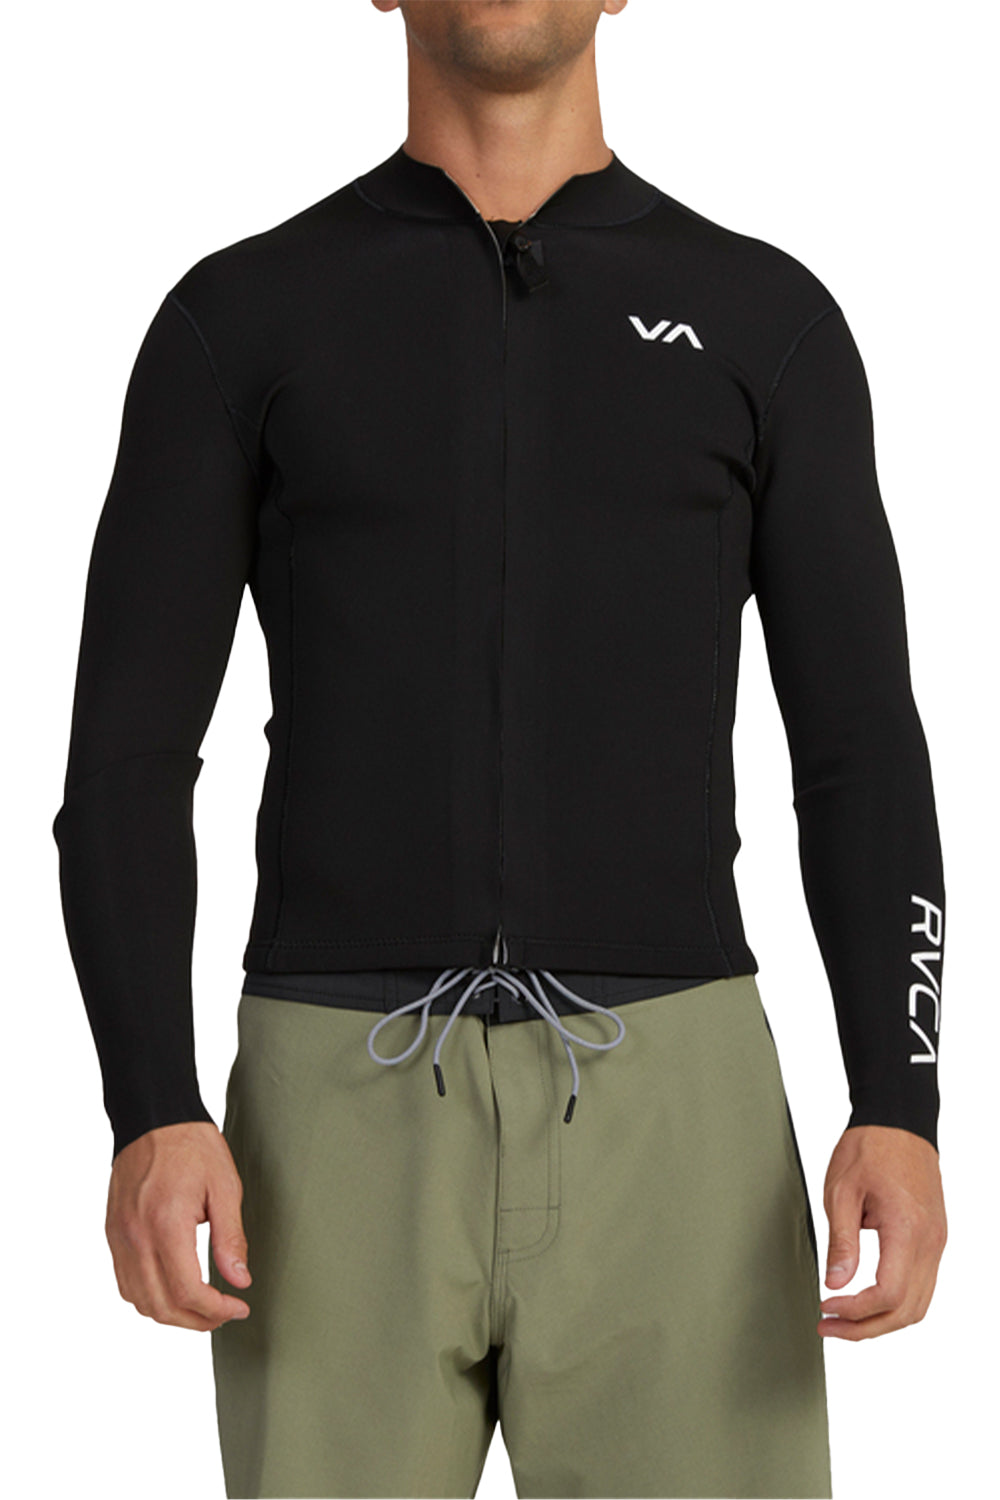 RVCA Mens 2mm Balance Front Zip Wetsuit Jacket